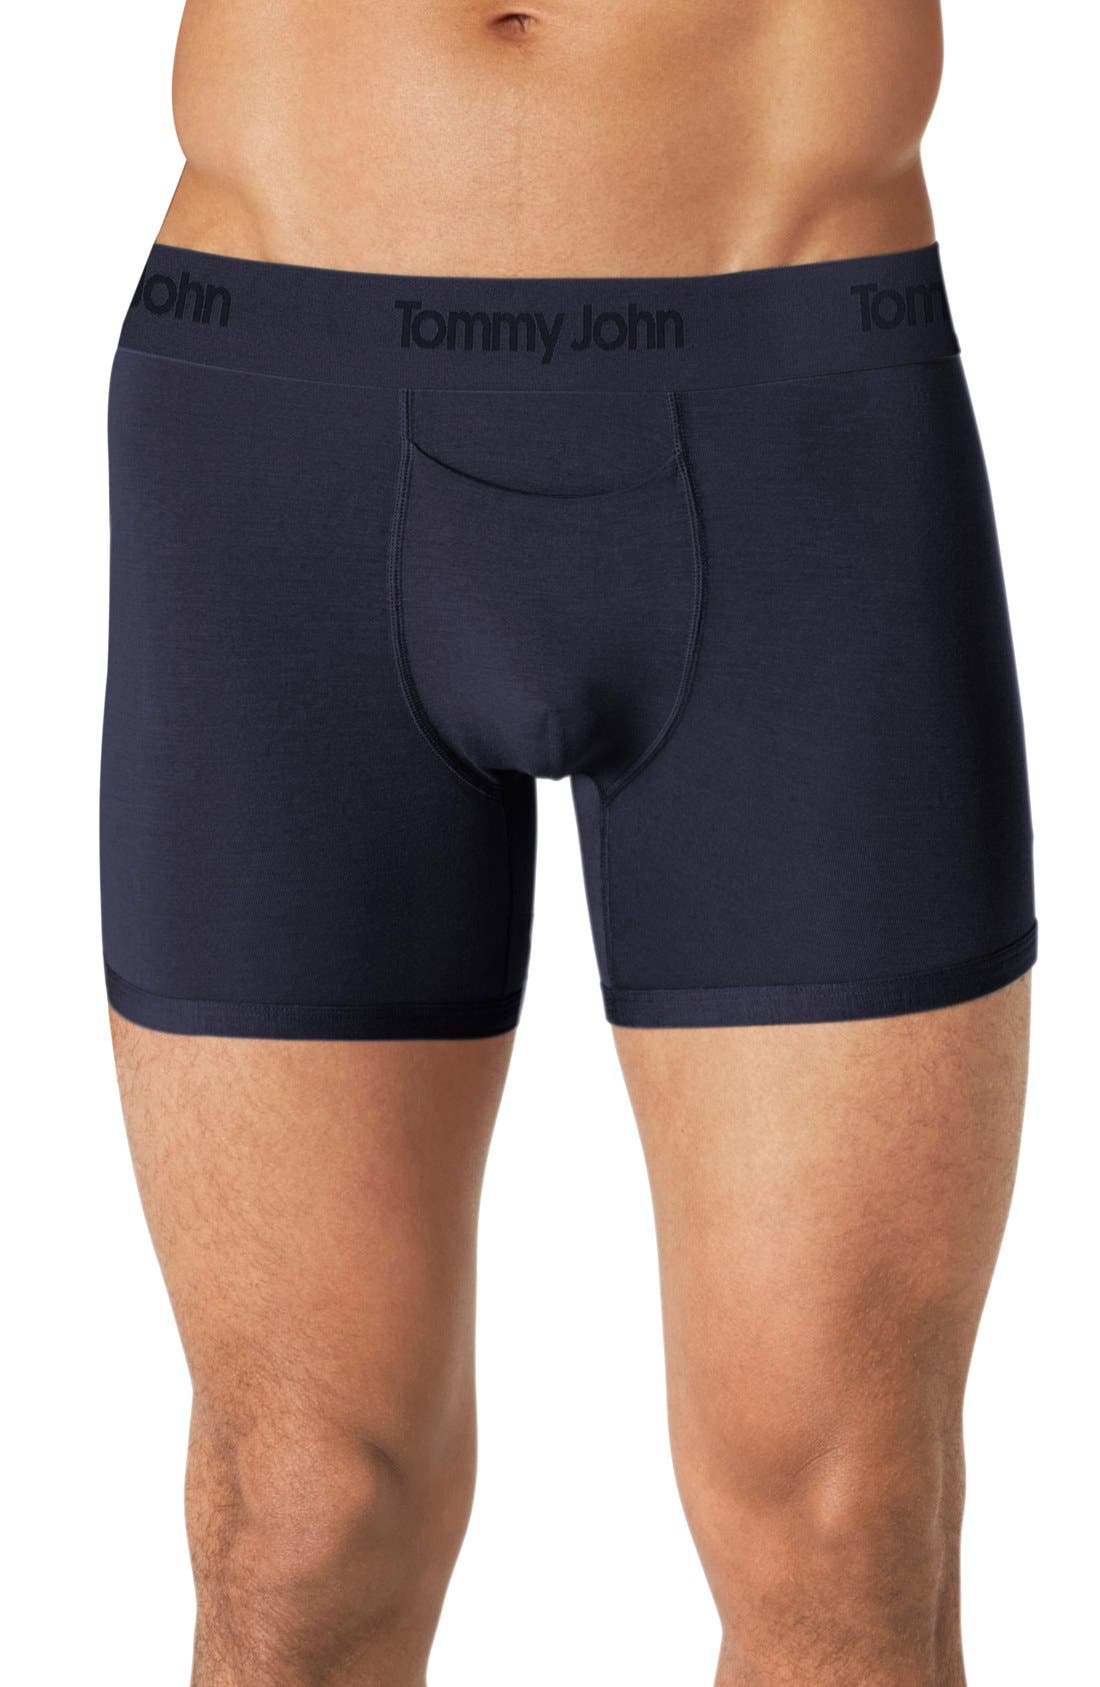 tommy johns underwear stores